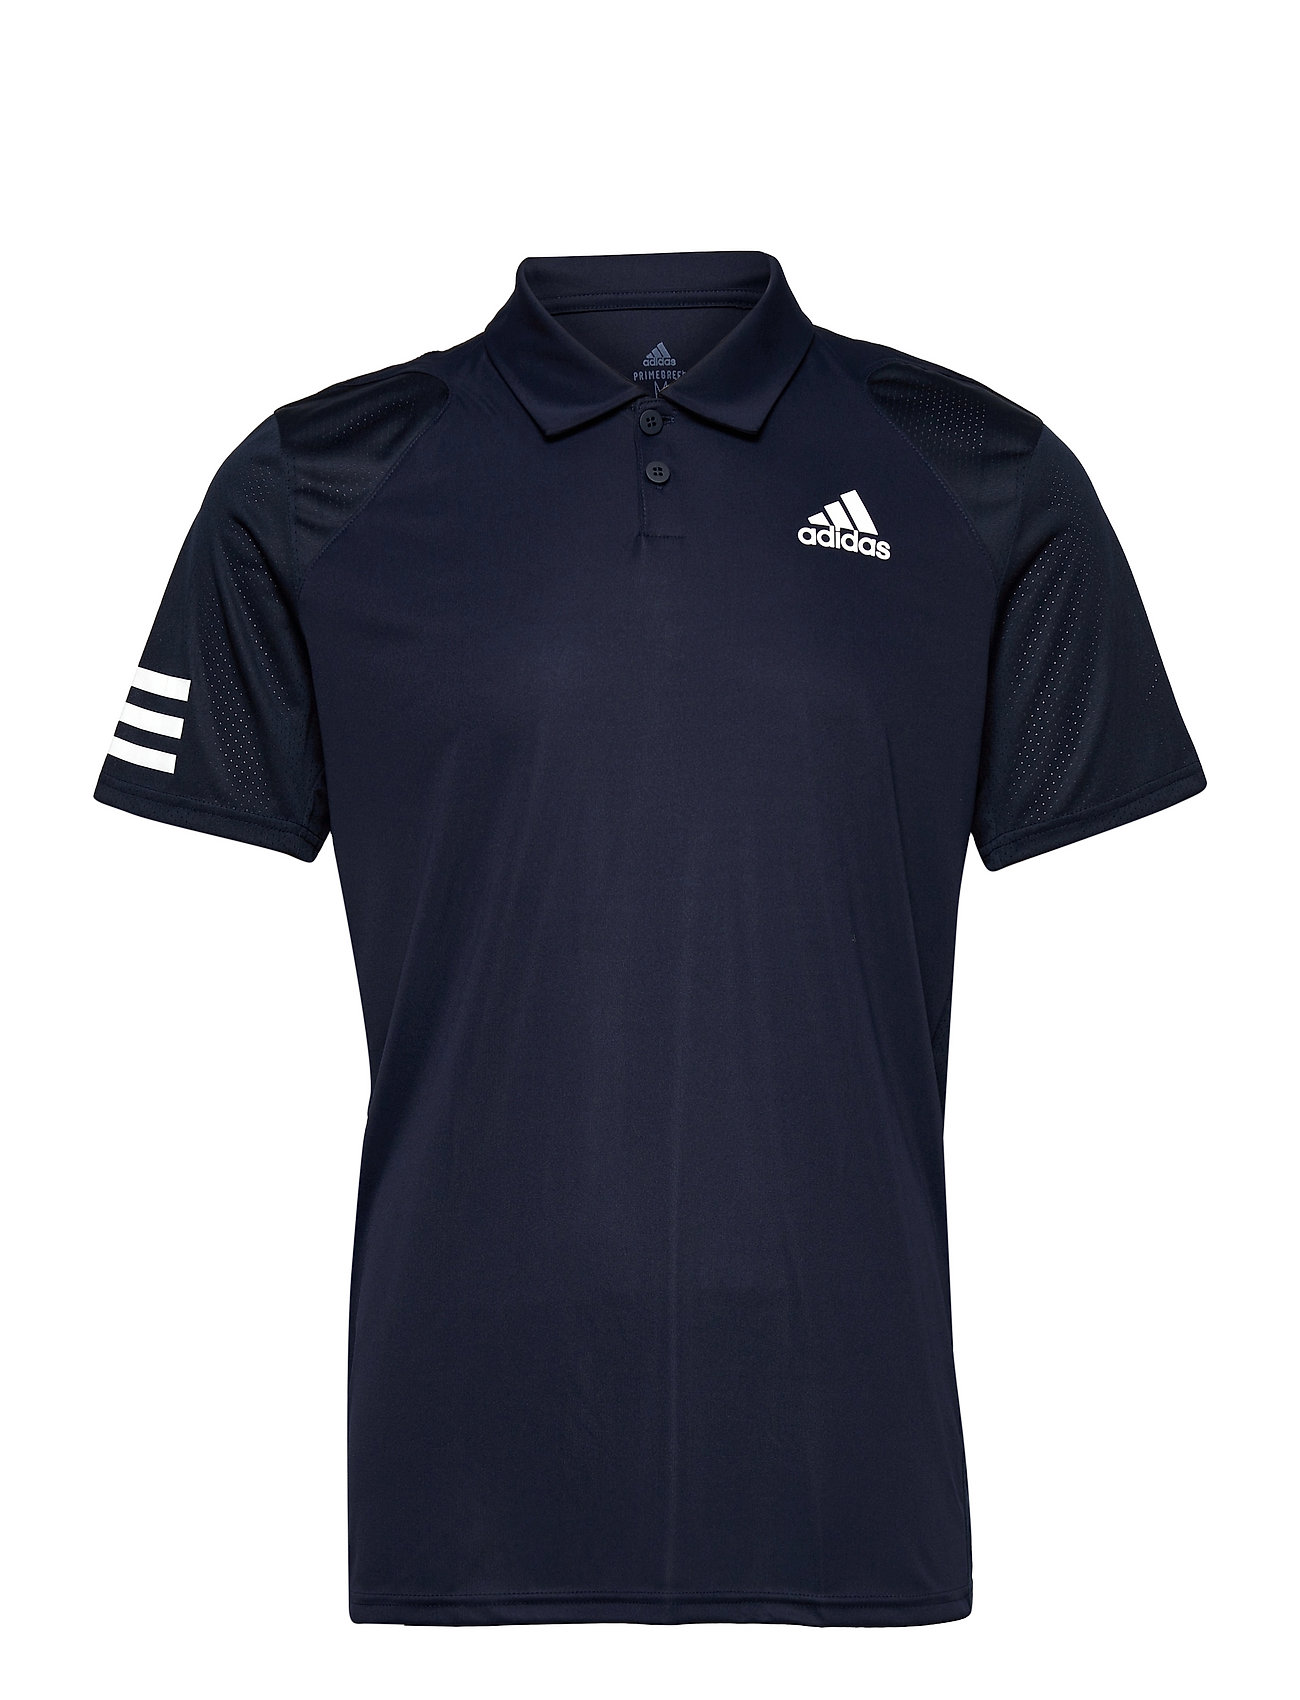 Club 3-Stripe Polo Shirt Polos Short-sleeved Sininen Adidas Performance, adidas Performance